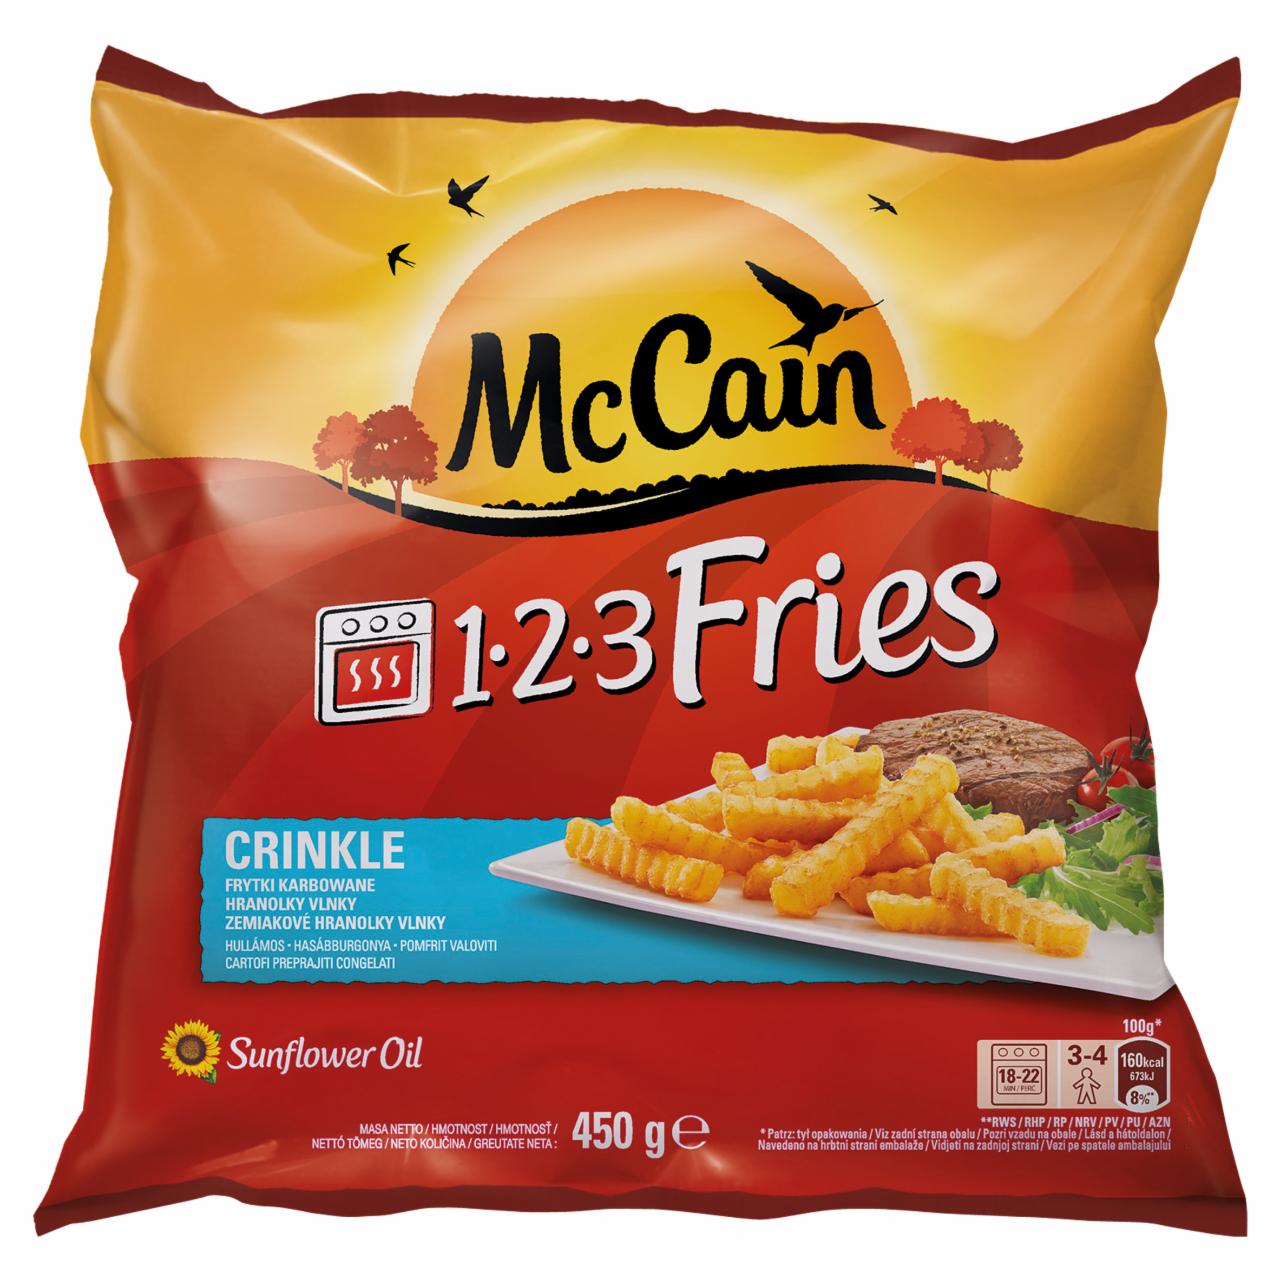 Zdjęcia - McCain 1.2.3 Fries Crinkle Frytki karbowane 450 g